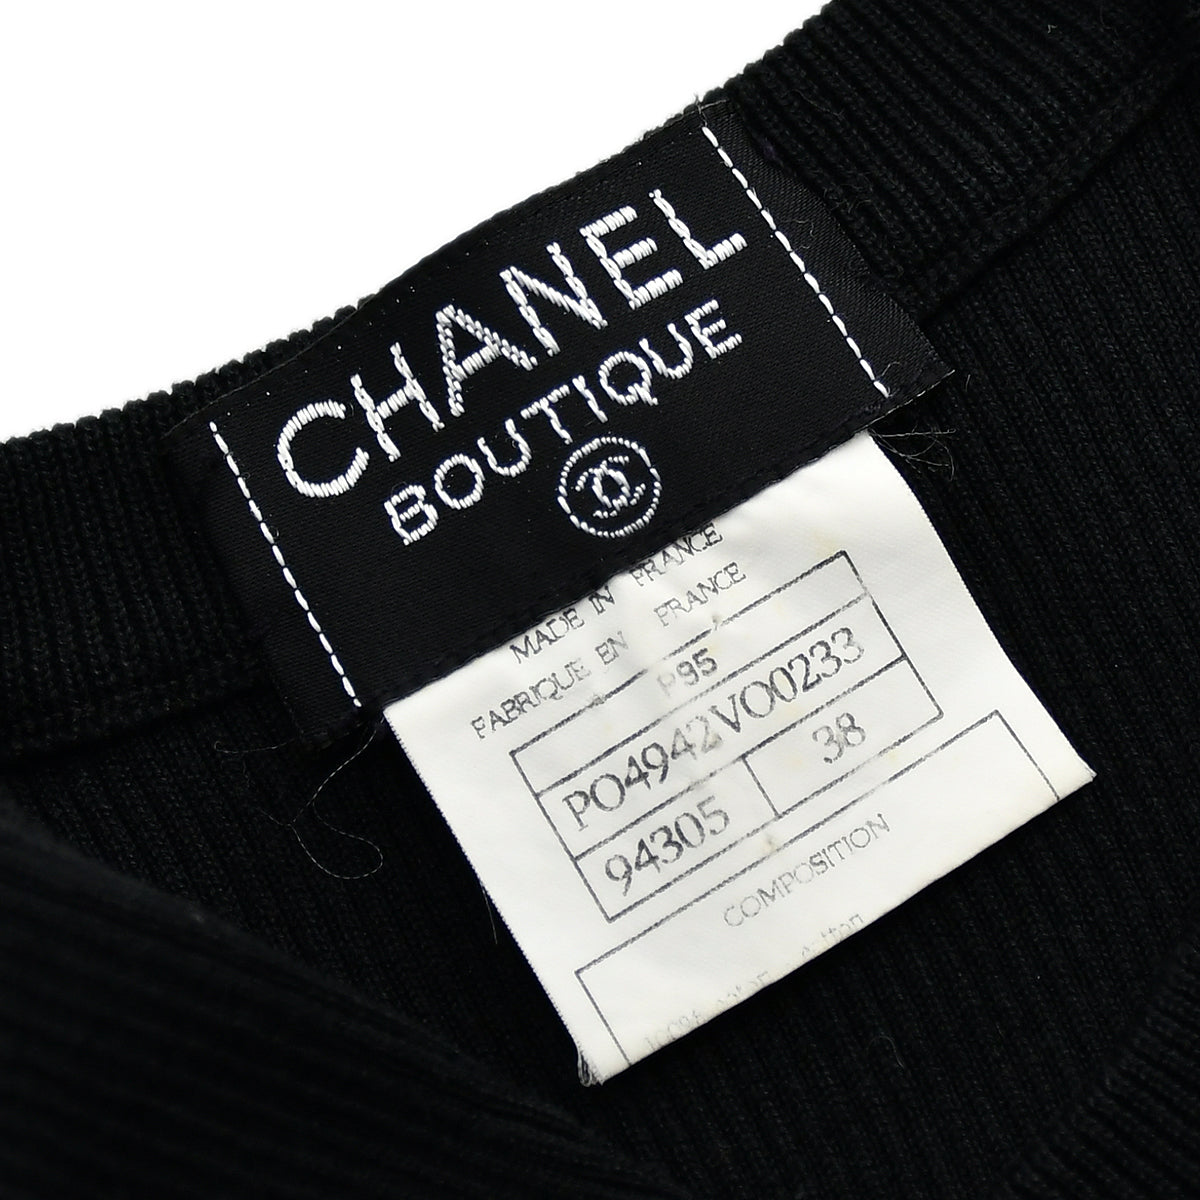 Chanel Sleeveless Tops Black